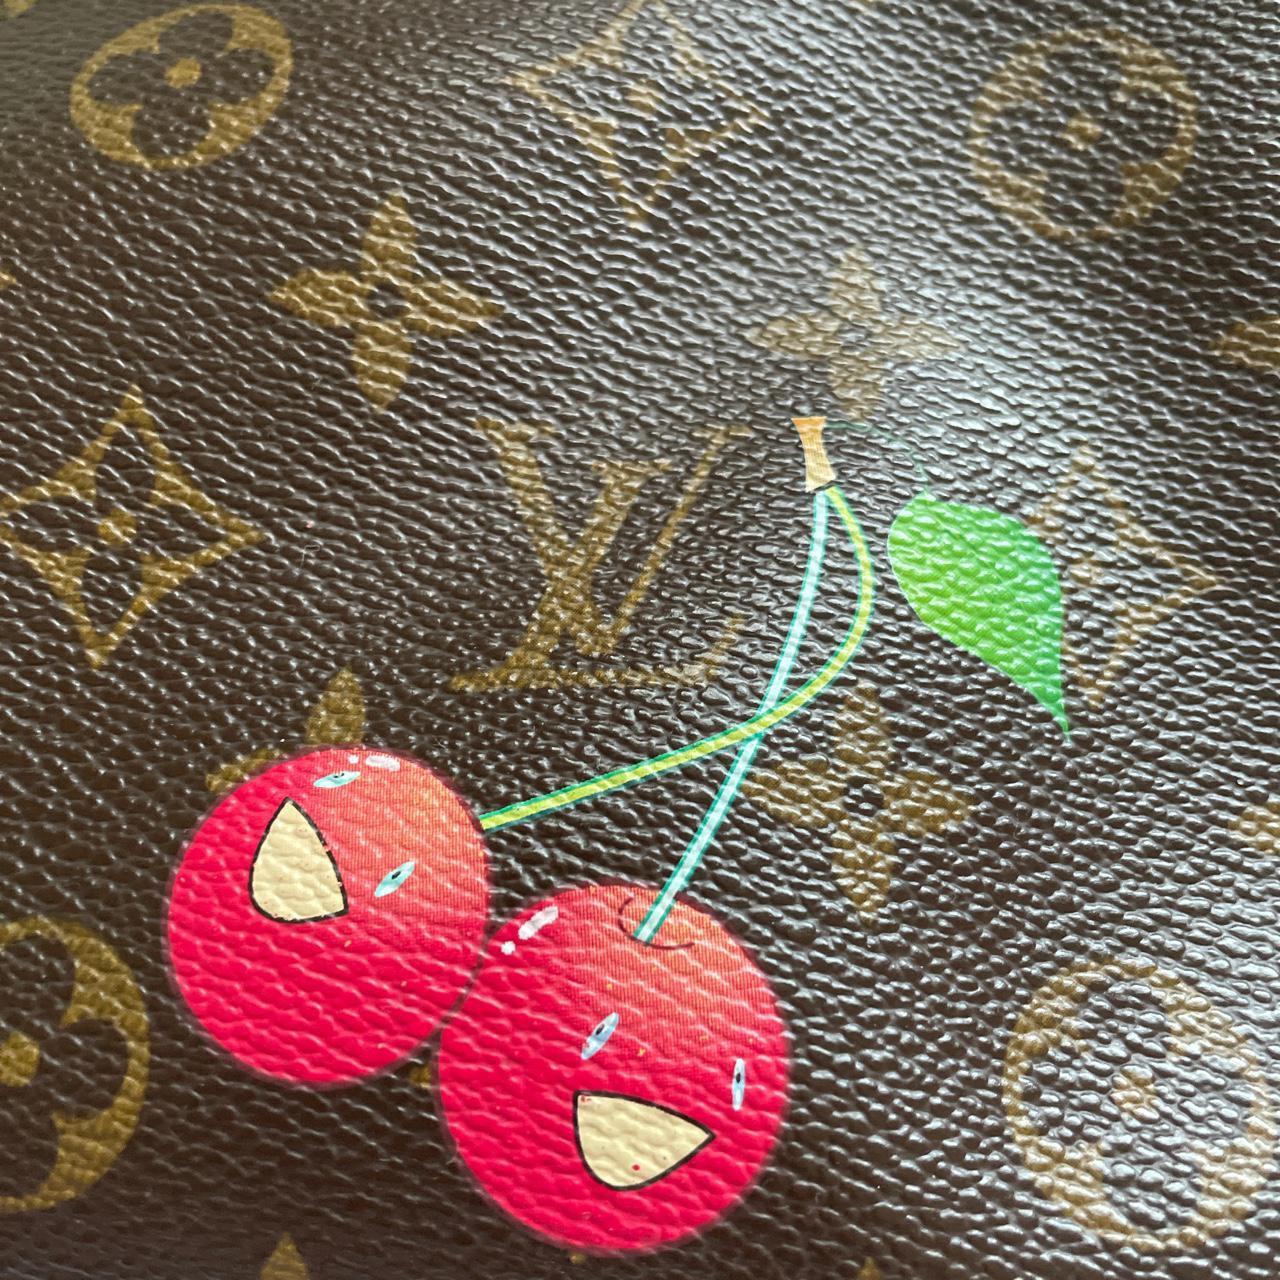 Louis Vuitton cherry pochette Discontinued limited - Depop